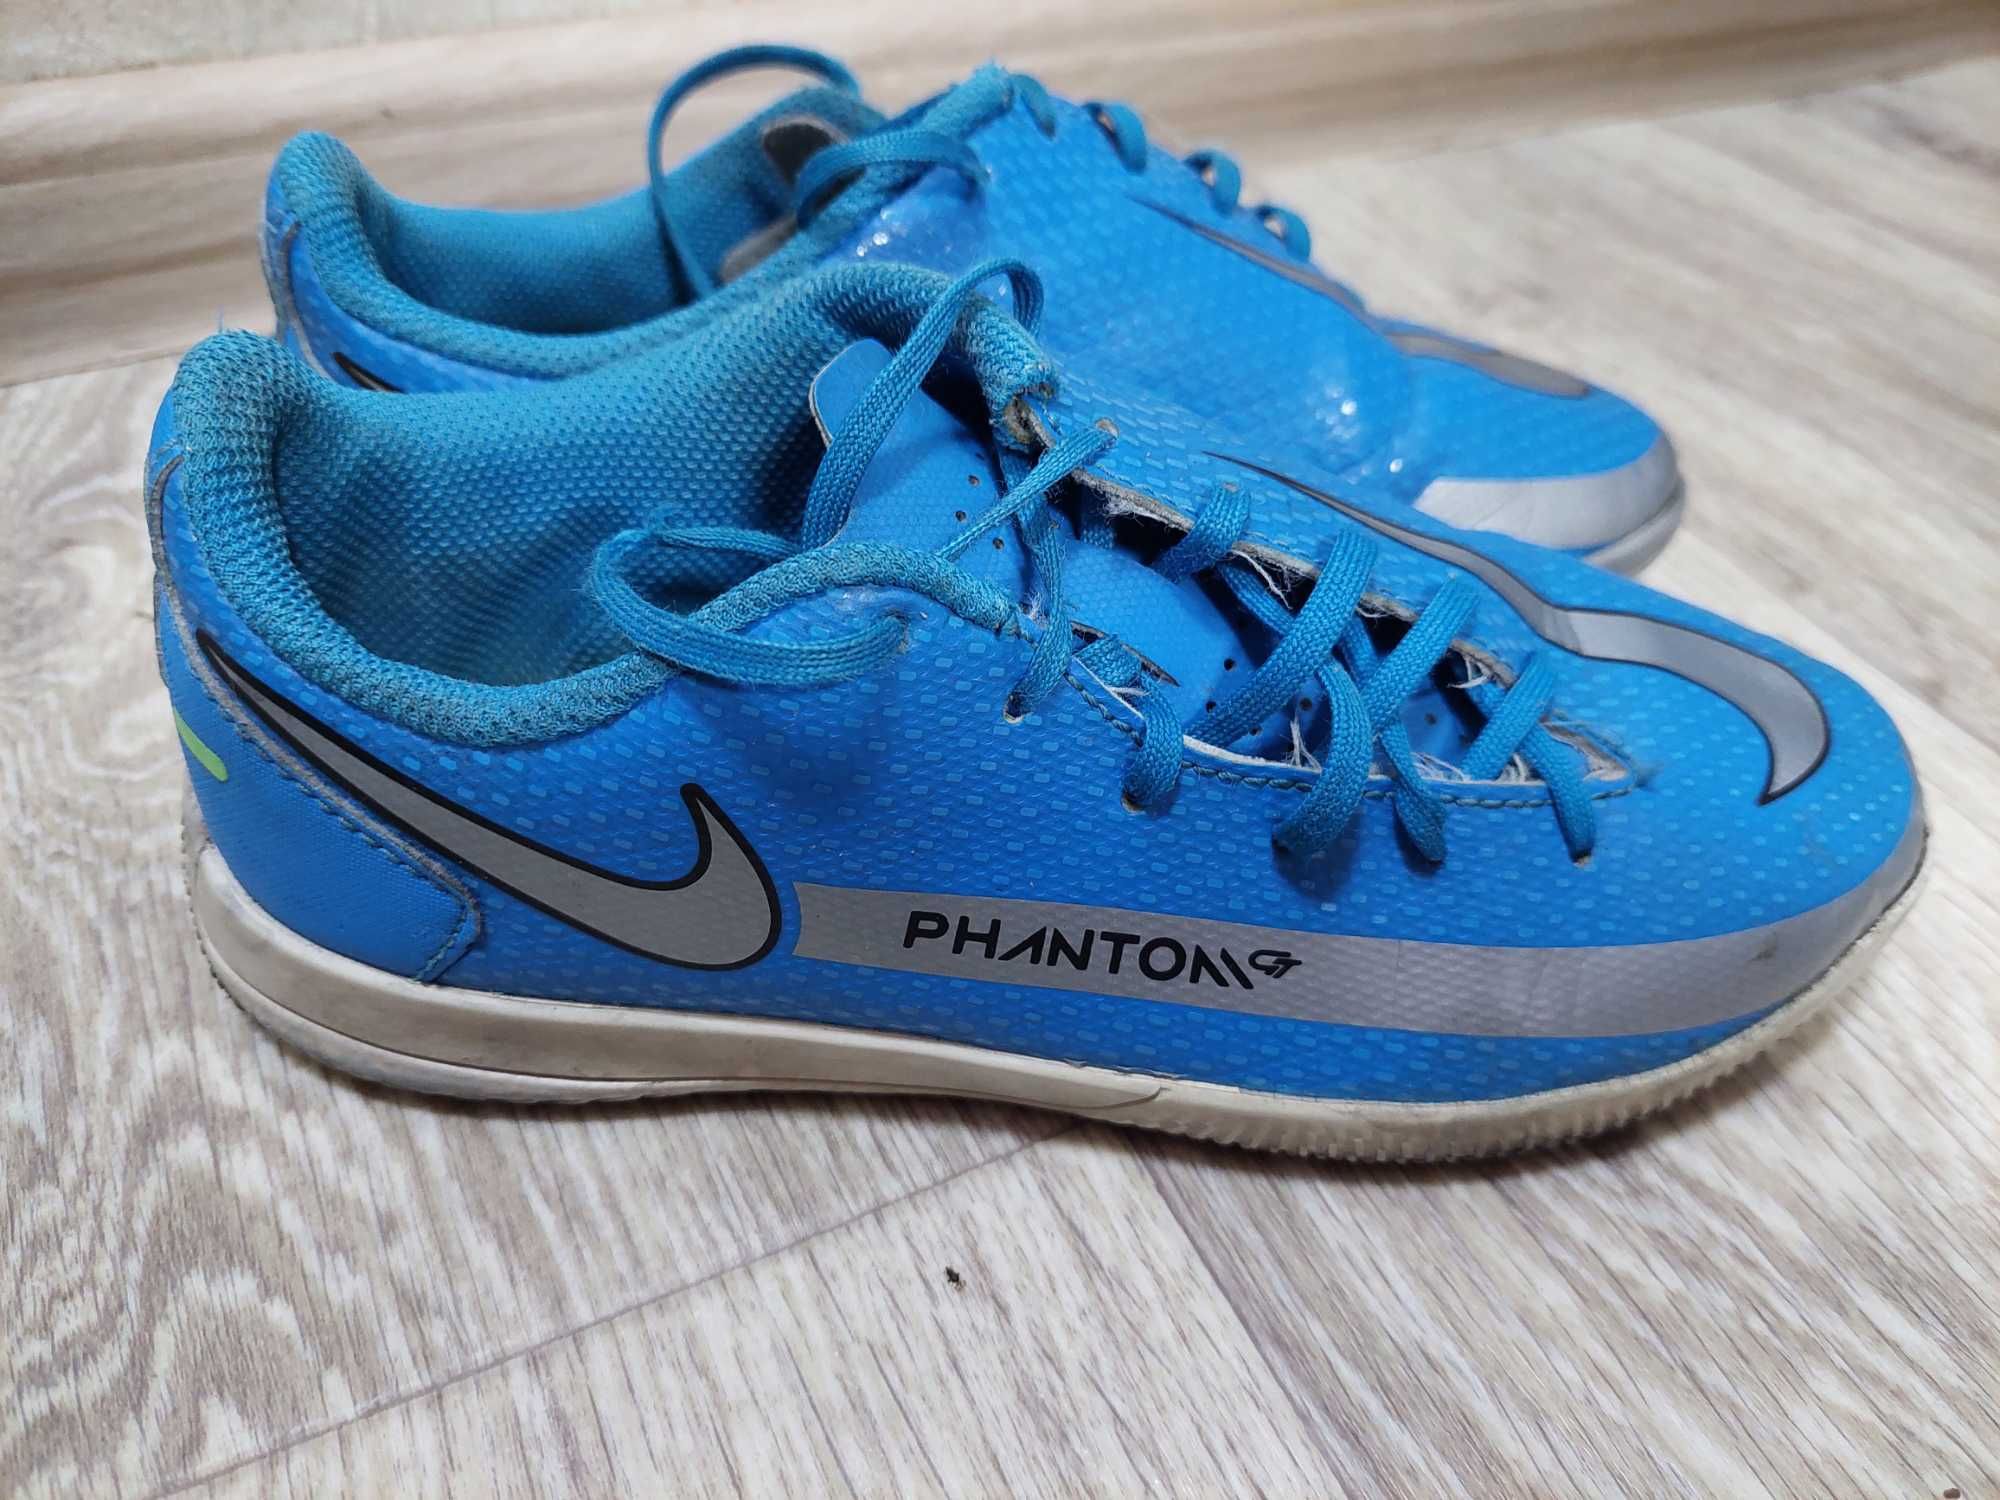 Футзалки Nike Phantom р. 32 стелька 20.5см